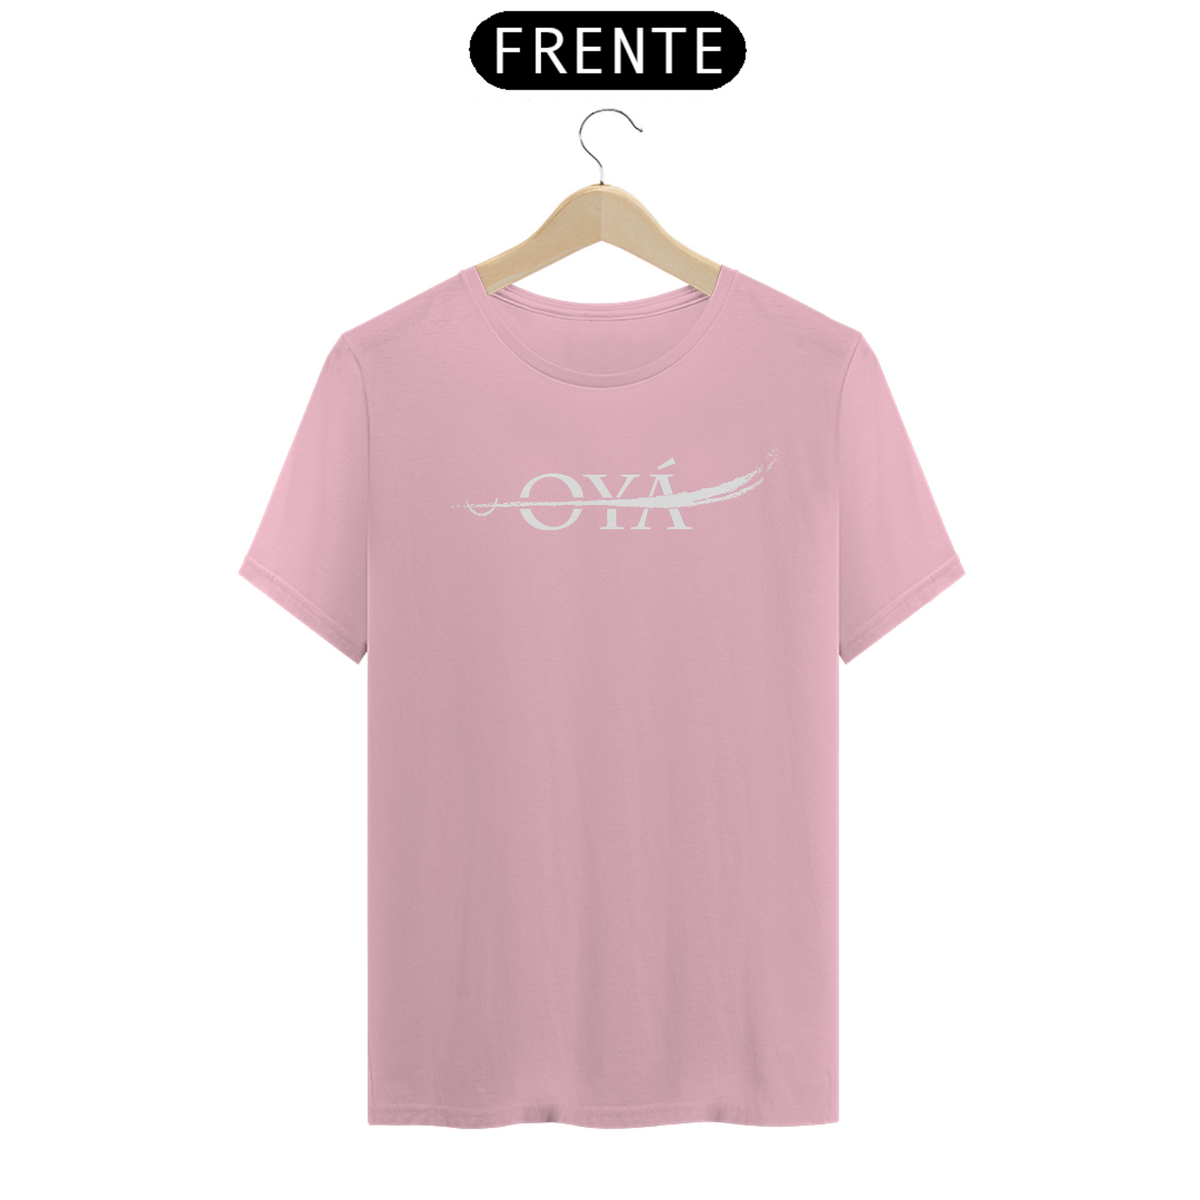 Nome do produto: T-Shirt Classic - Okan Oyá